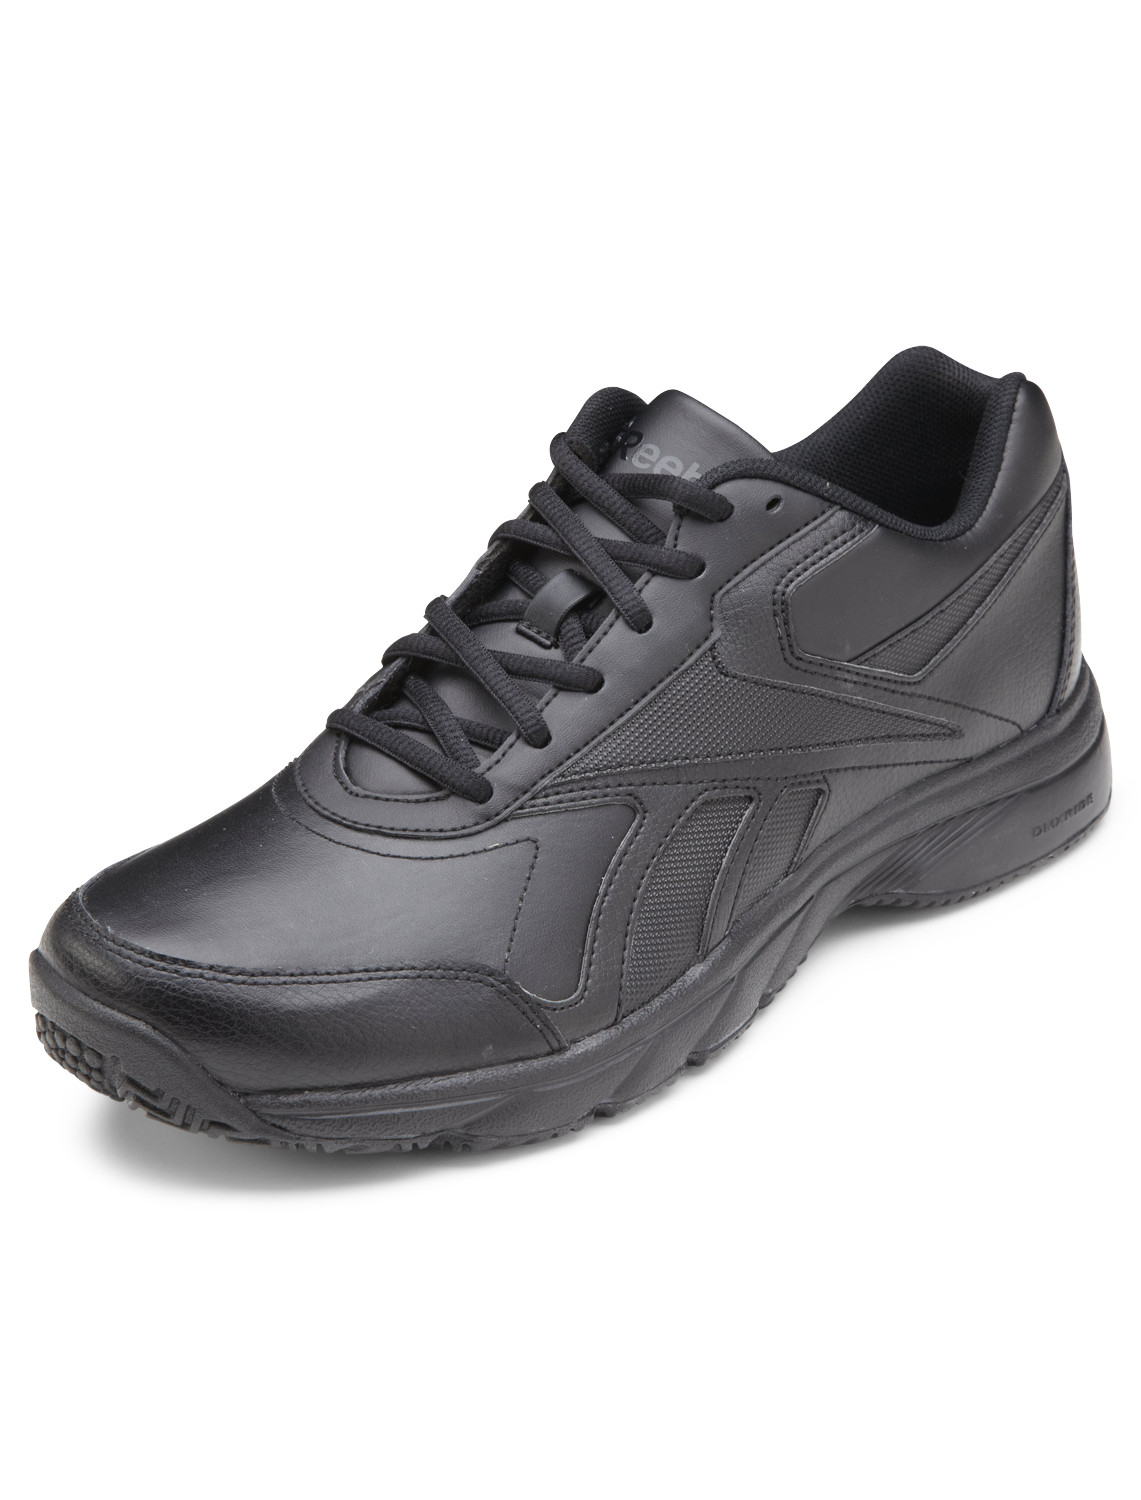 Reebok Work-N-Cushion Sneakers Casual Male XL Big & Tall | eBay